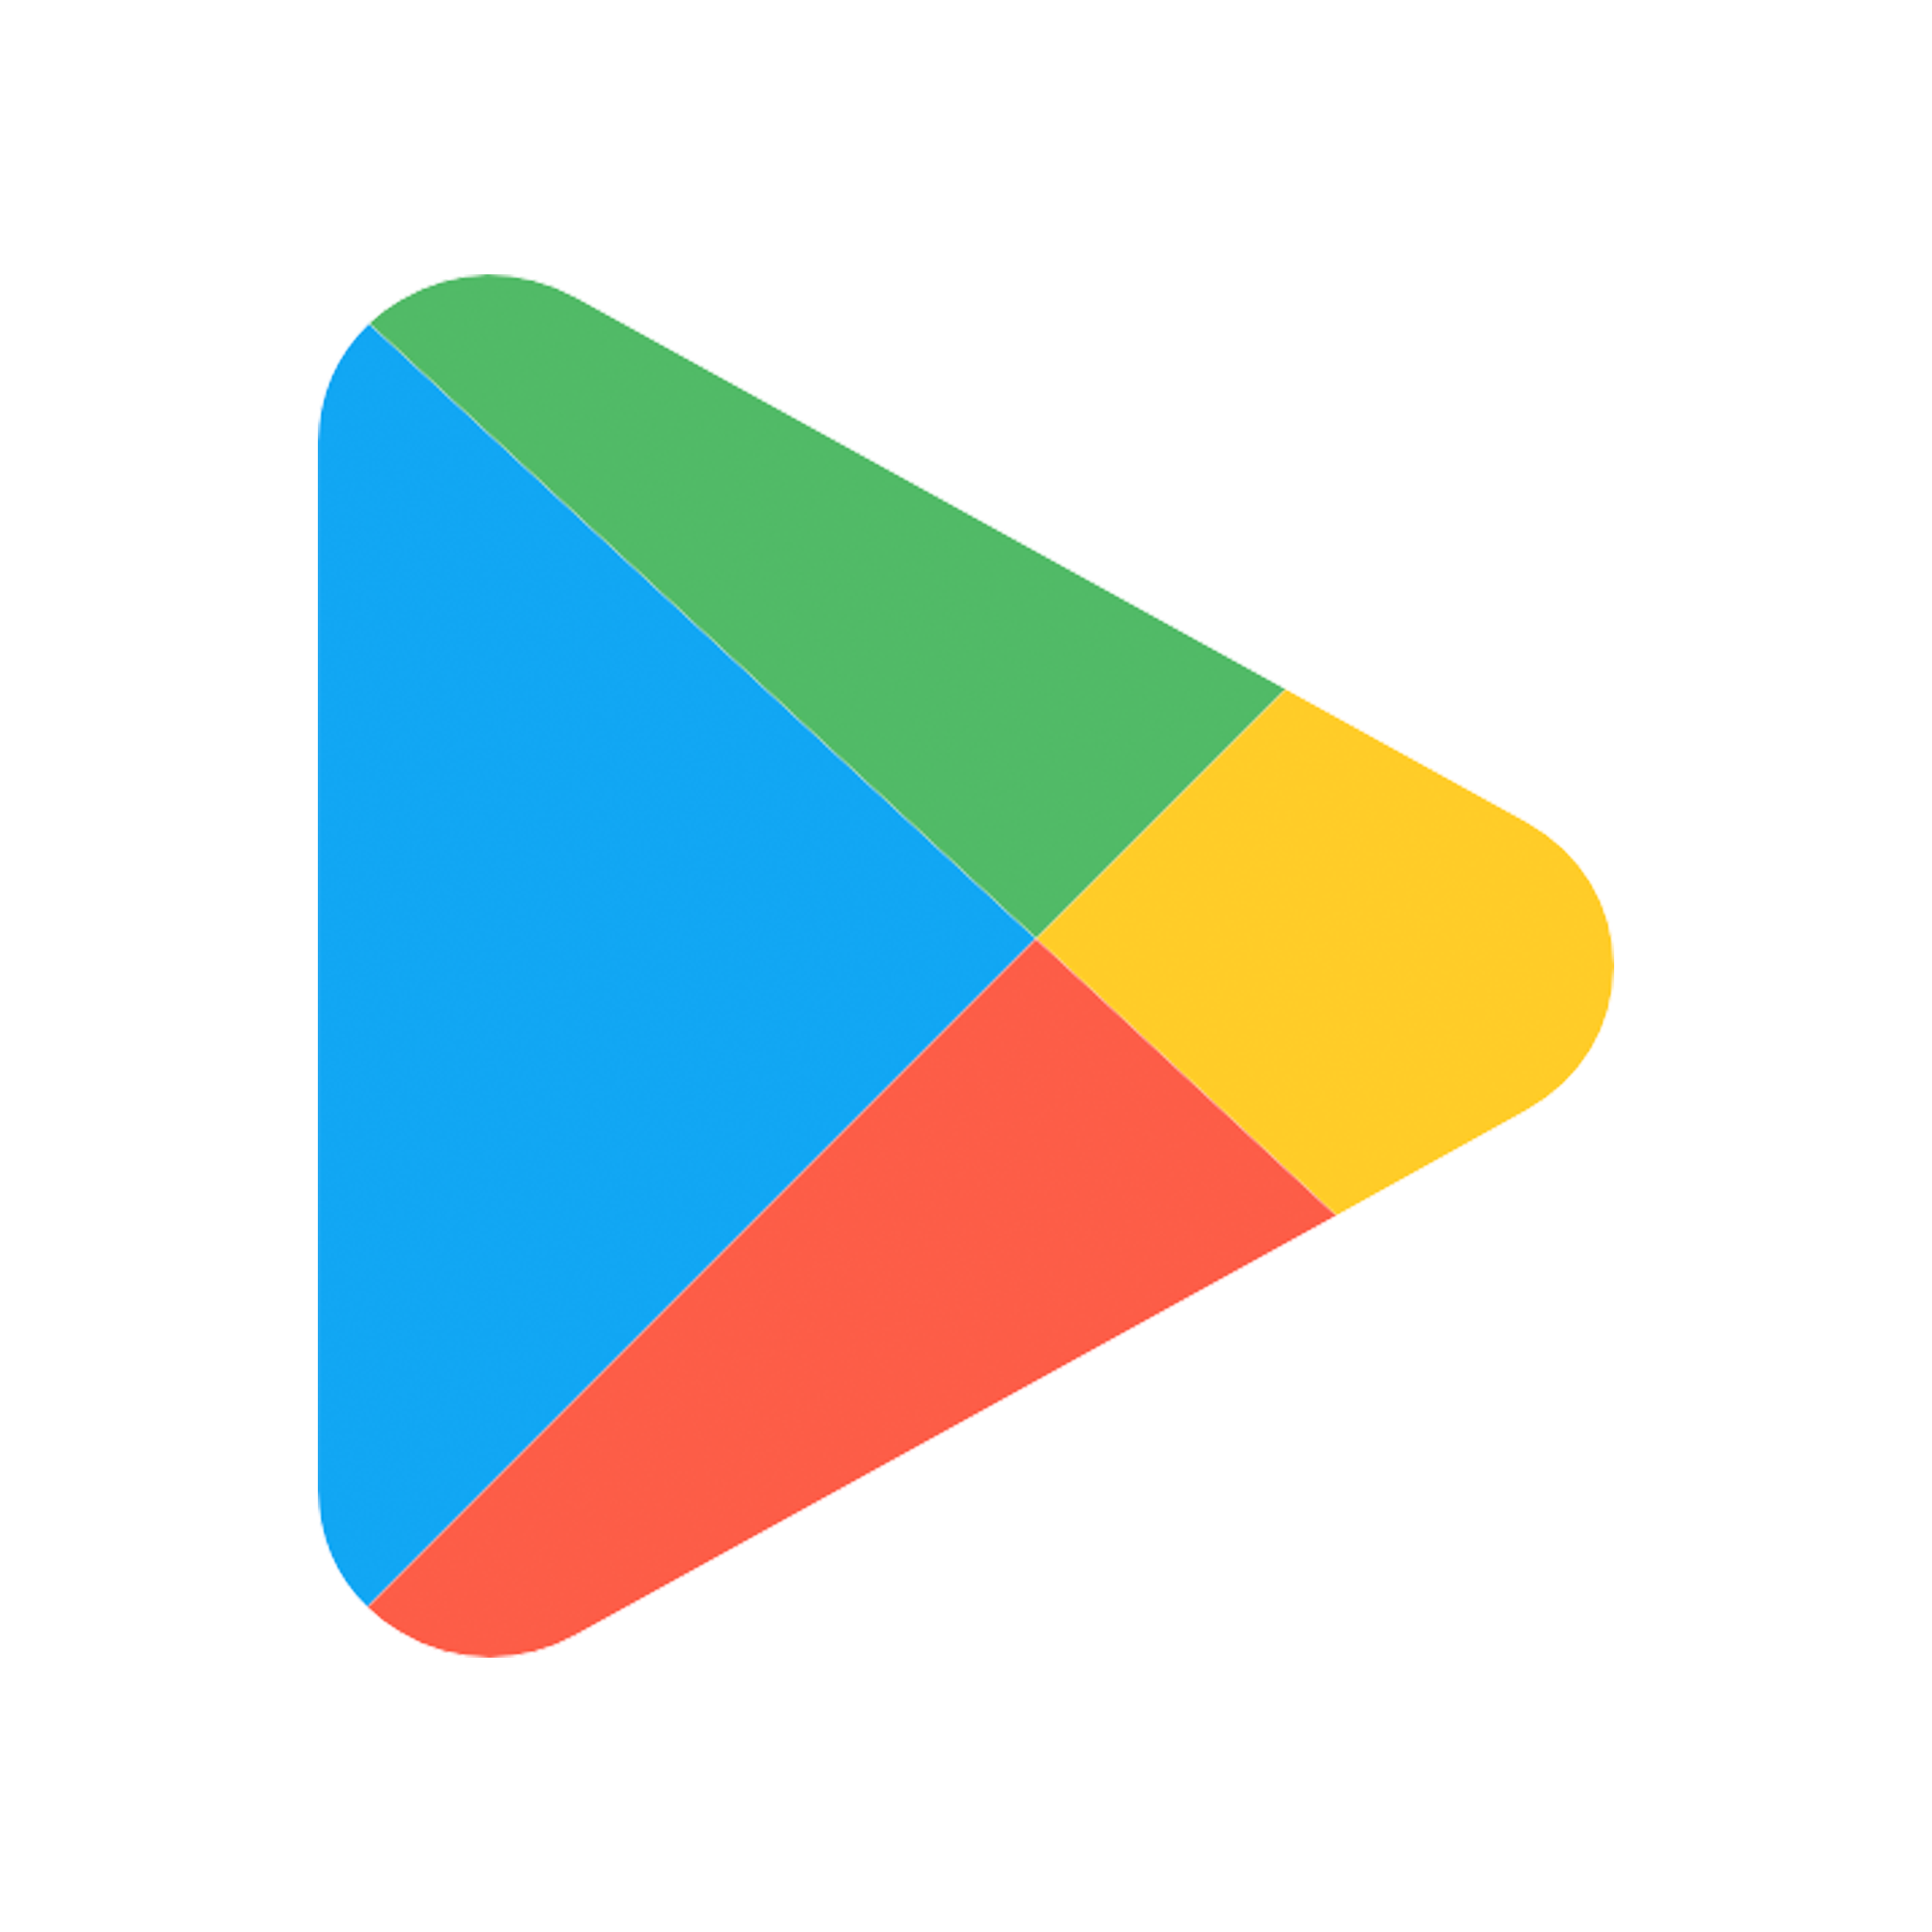 Google Play Image